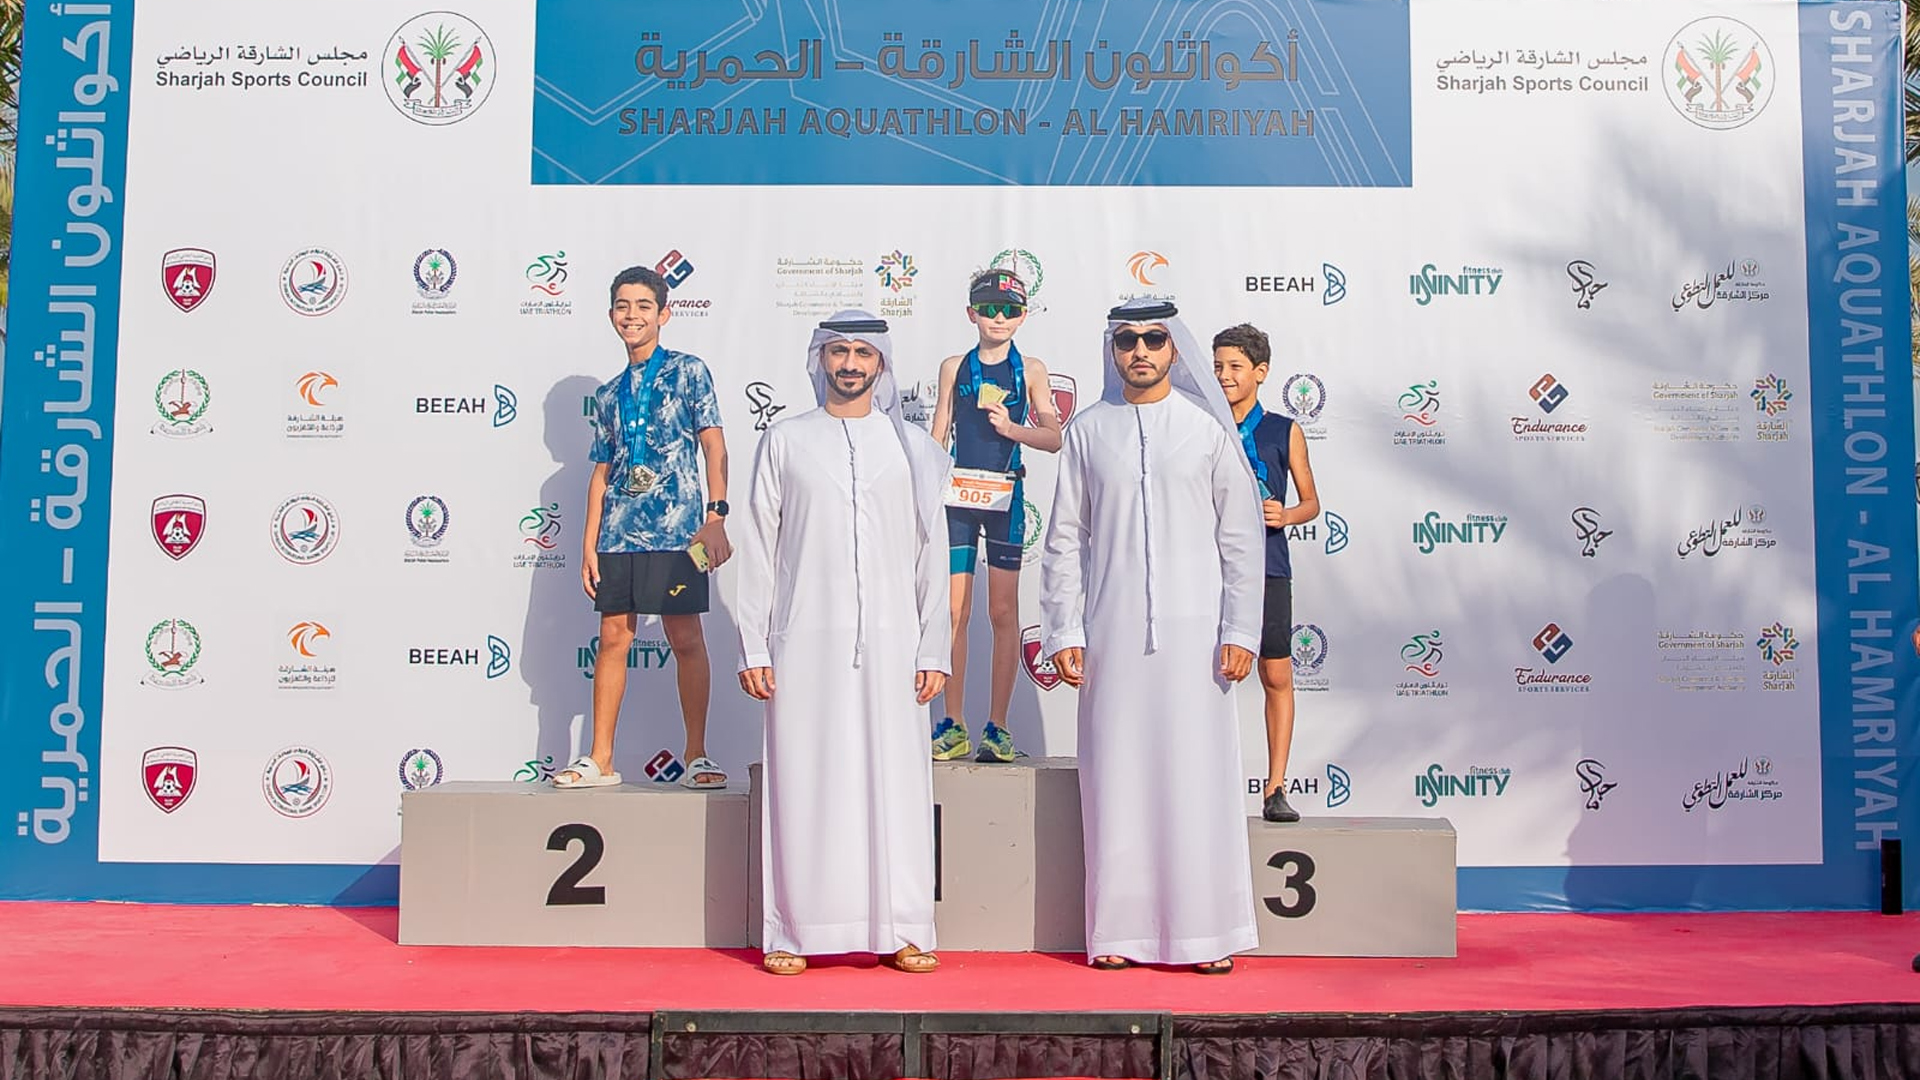 Successful Conclusion of the Third Edition of the Sharjah – Al Hamriya Aquathlon: A Celebration of Community Sports